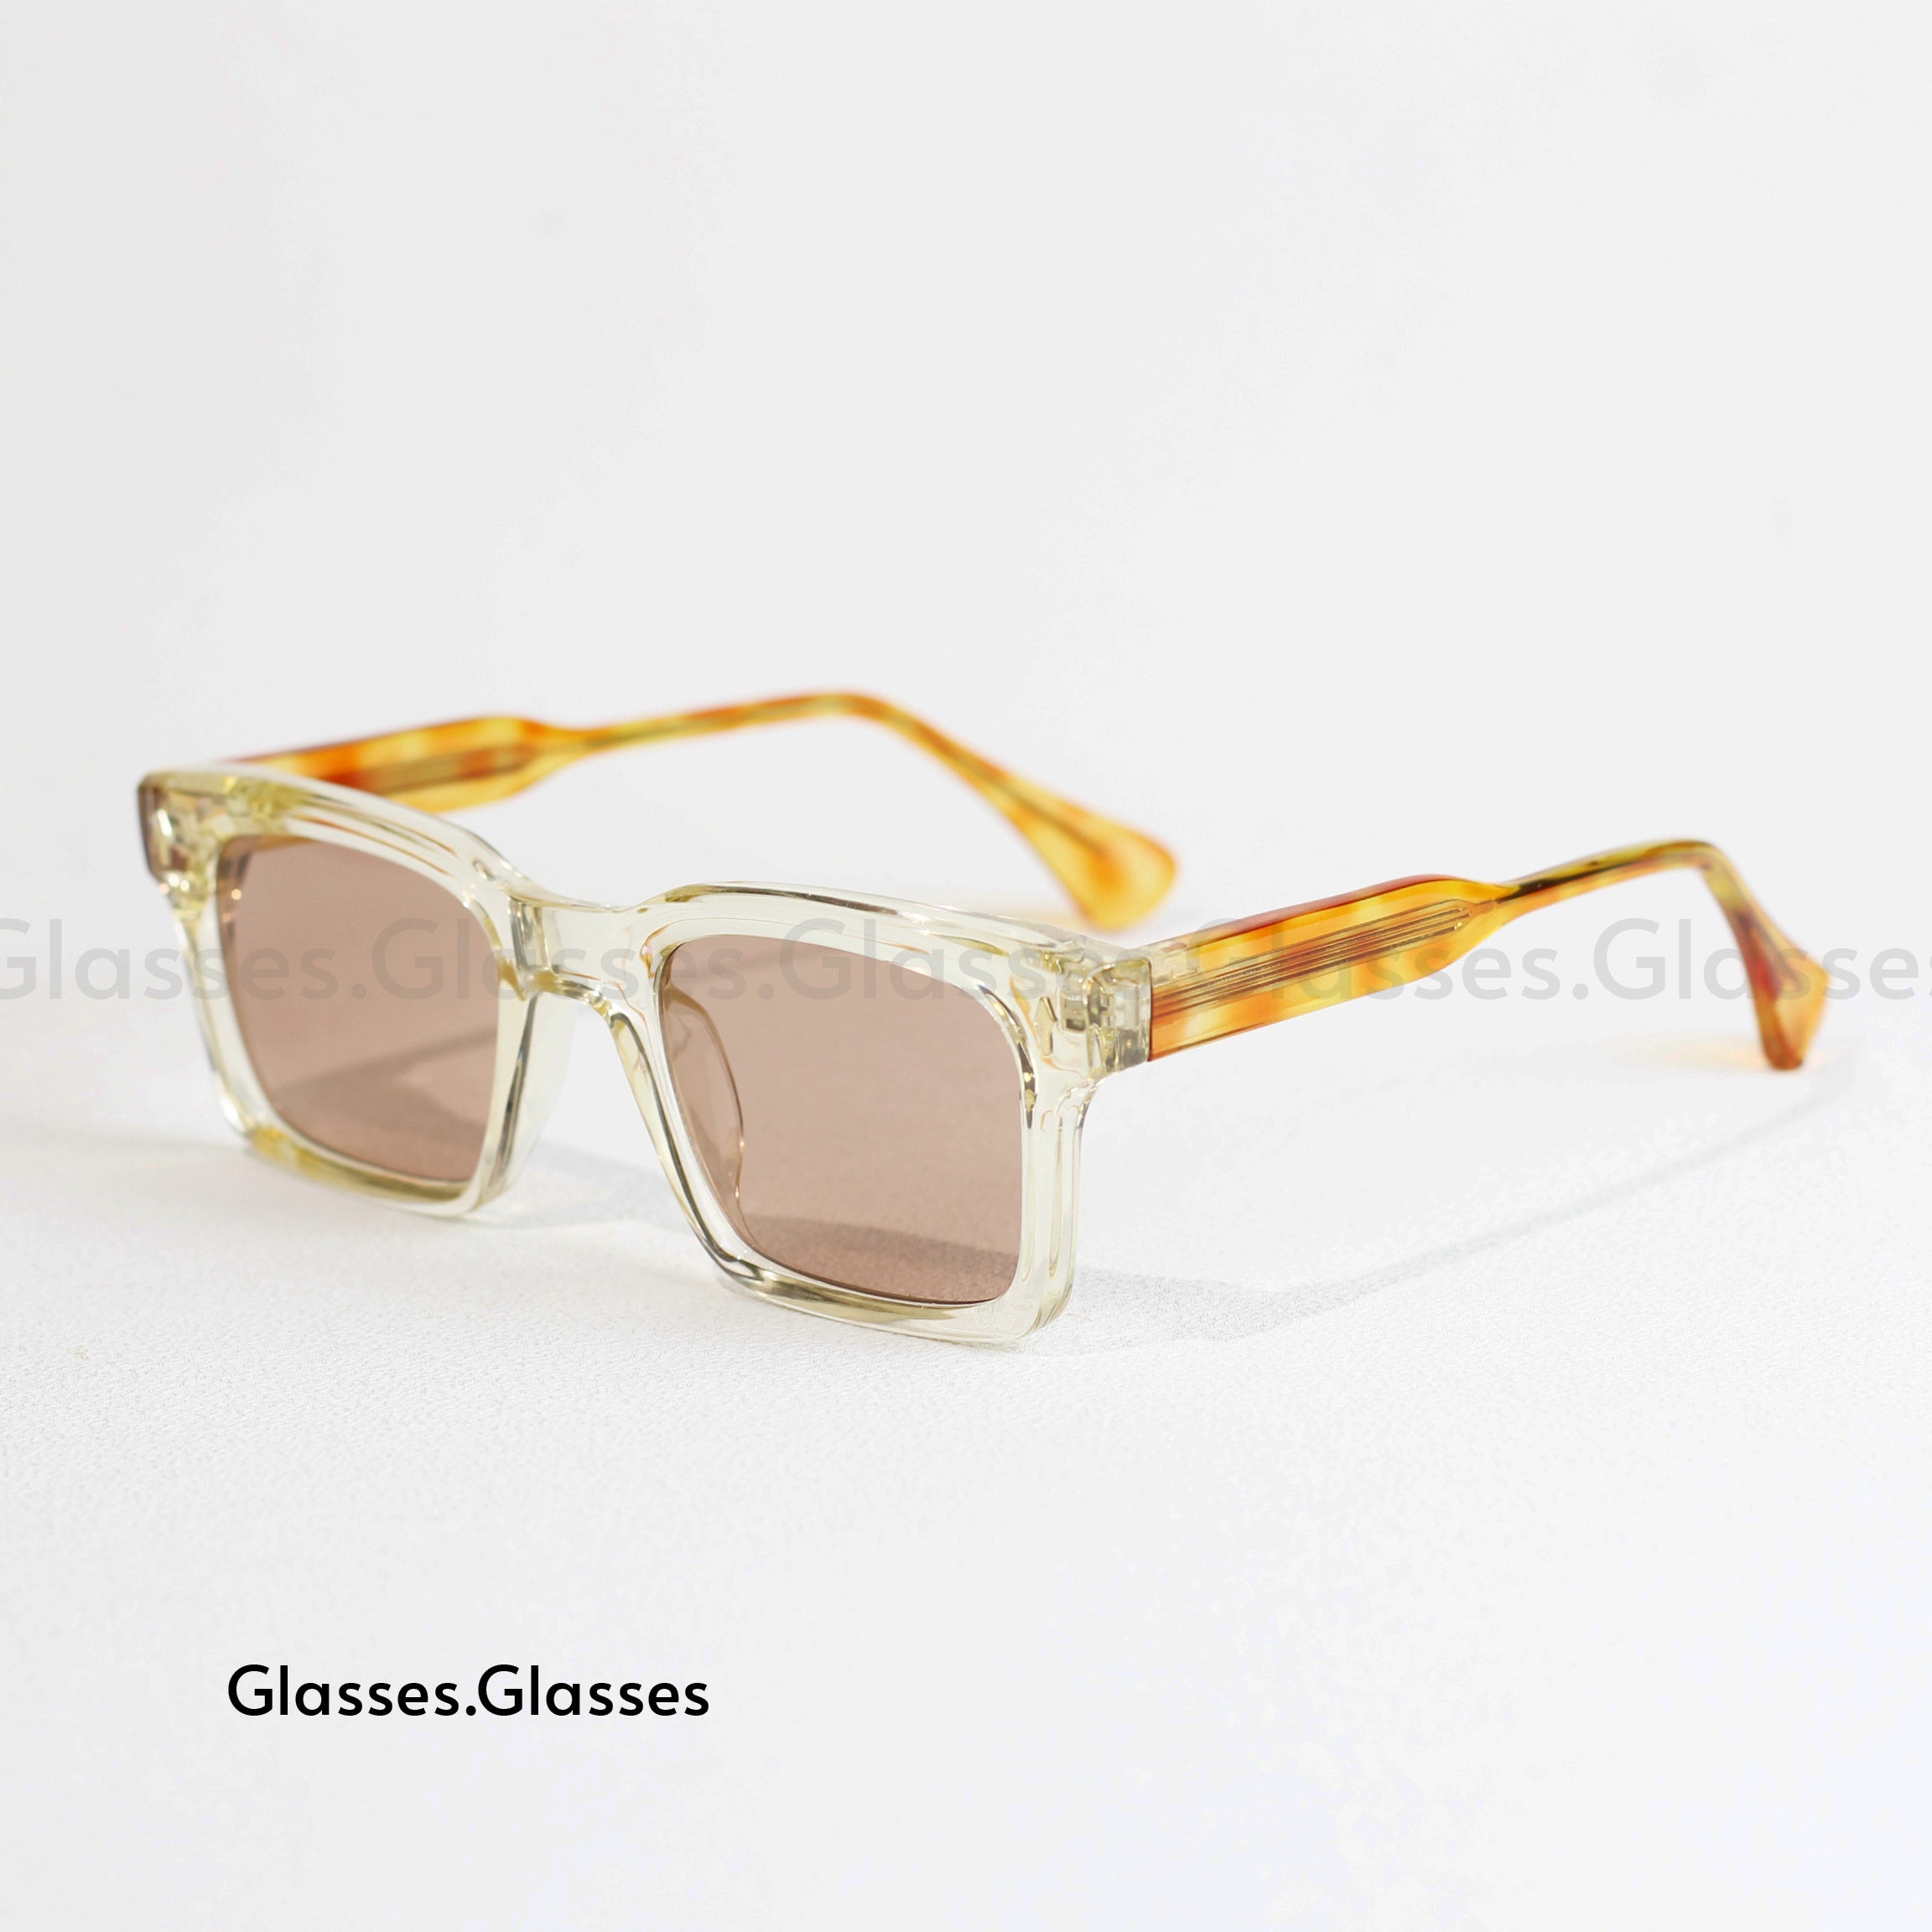 William Retro - Polycarbonate Frame Square Glasses